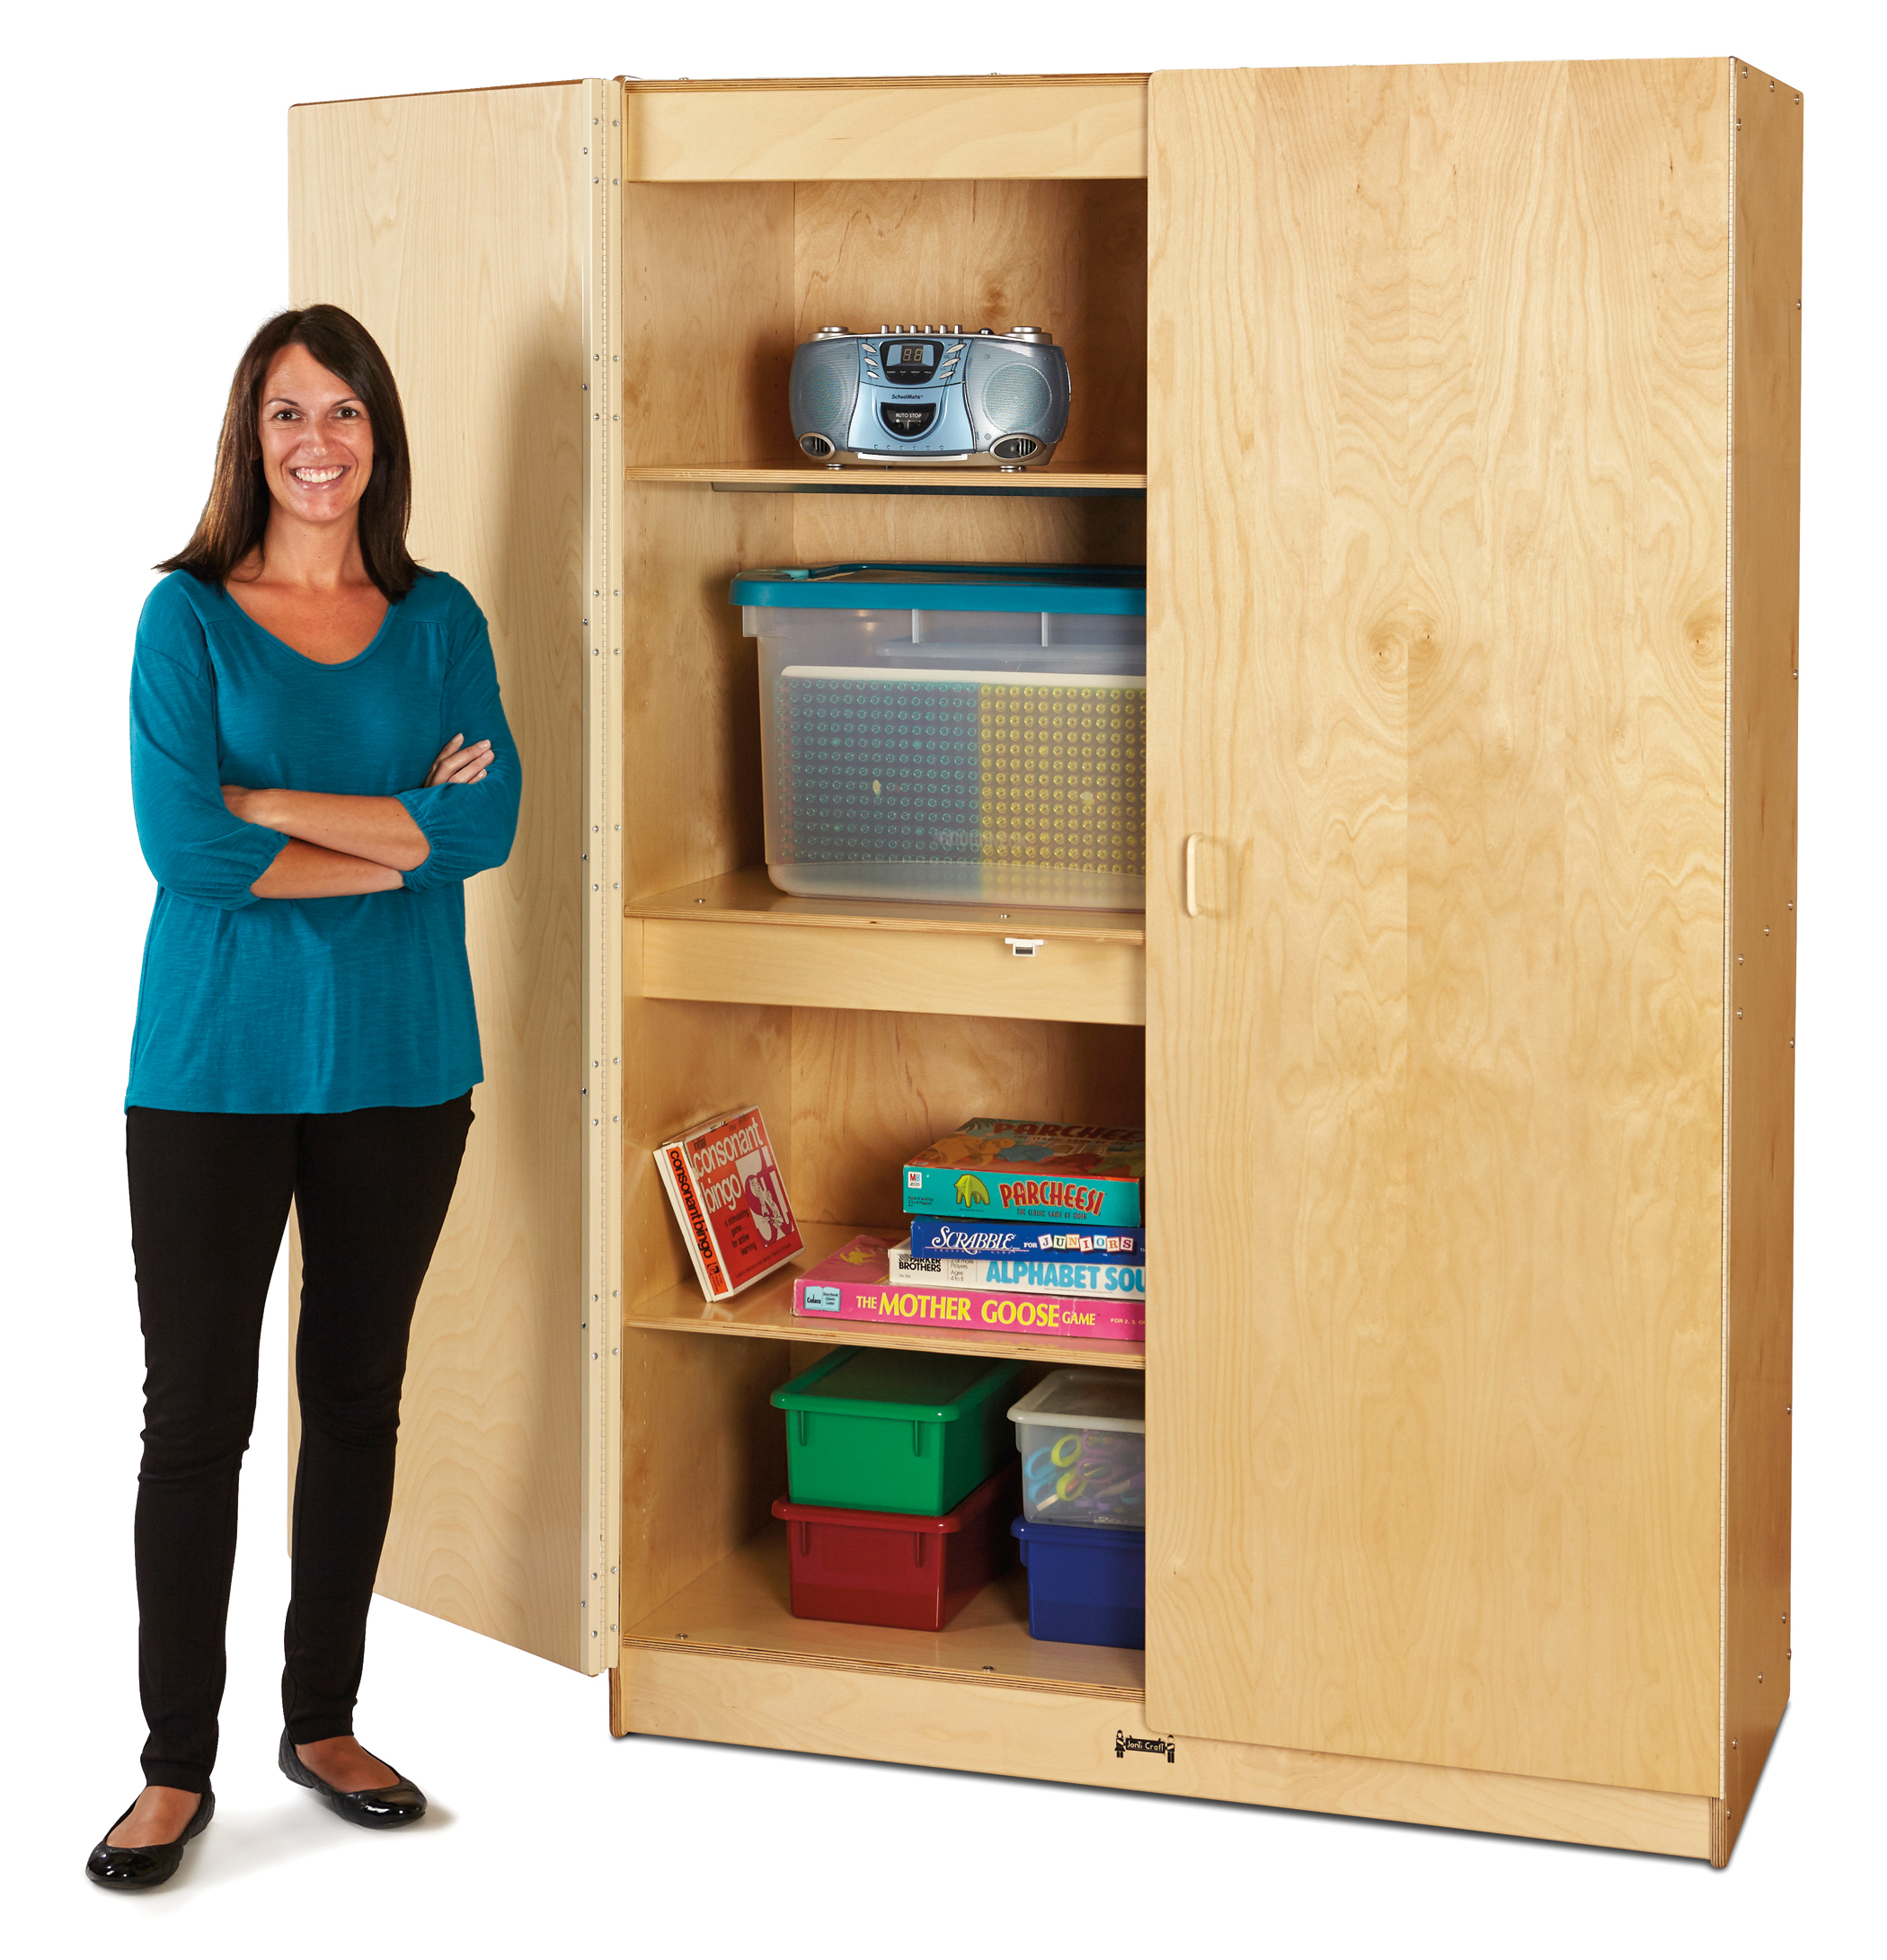 Jonti-Craft® Storage Cabinet - Mobile